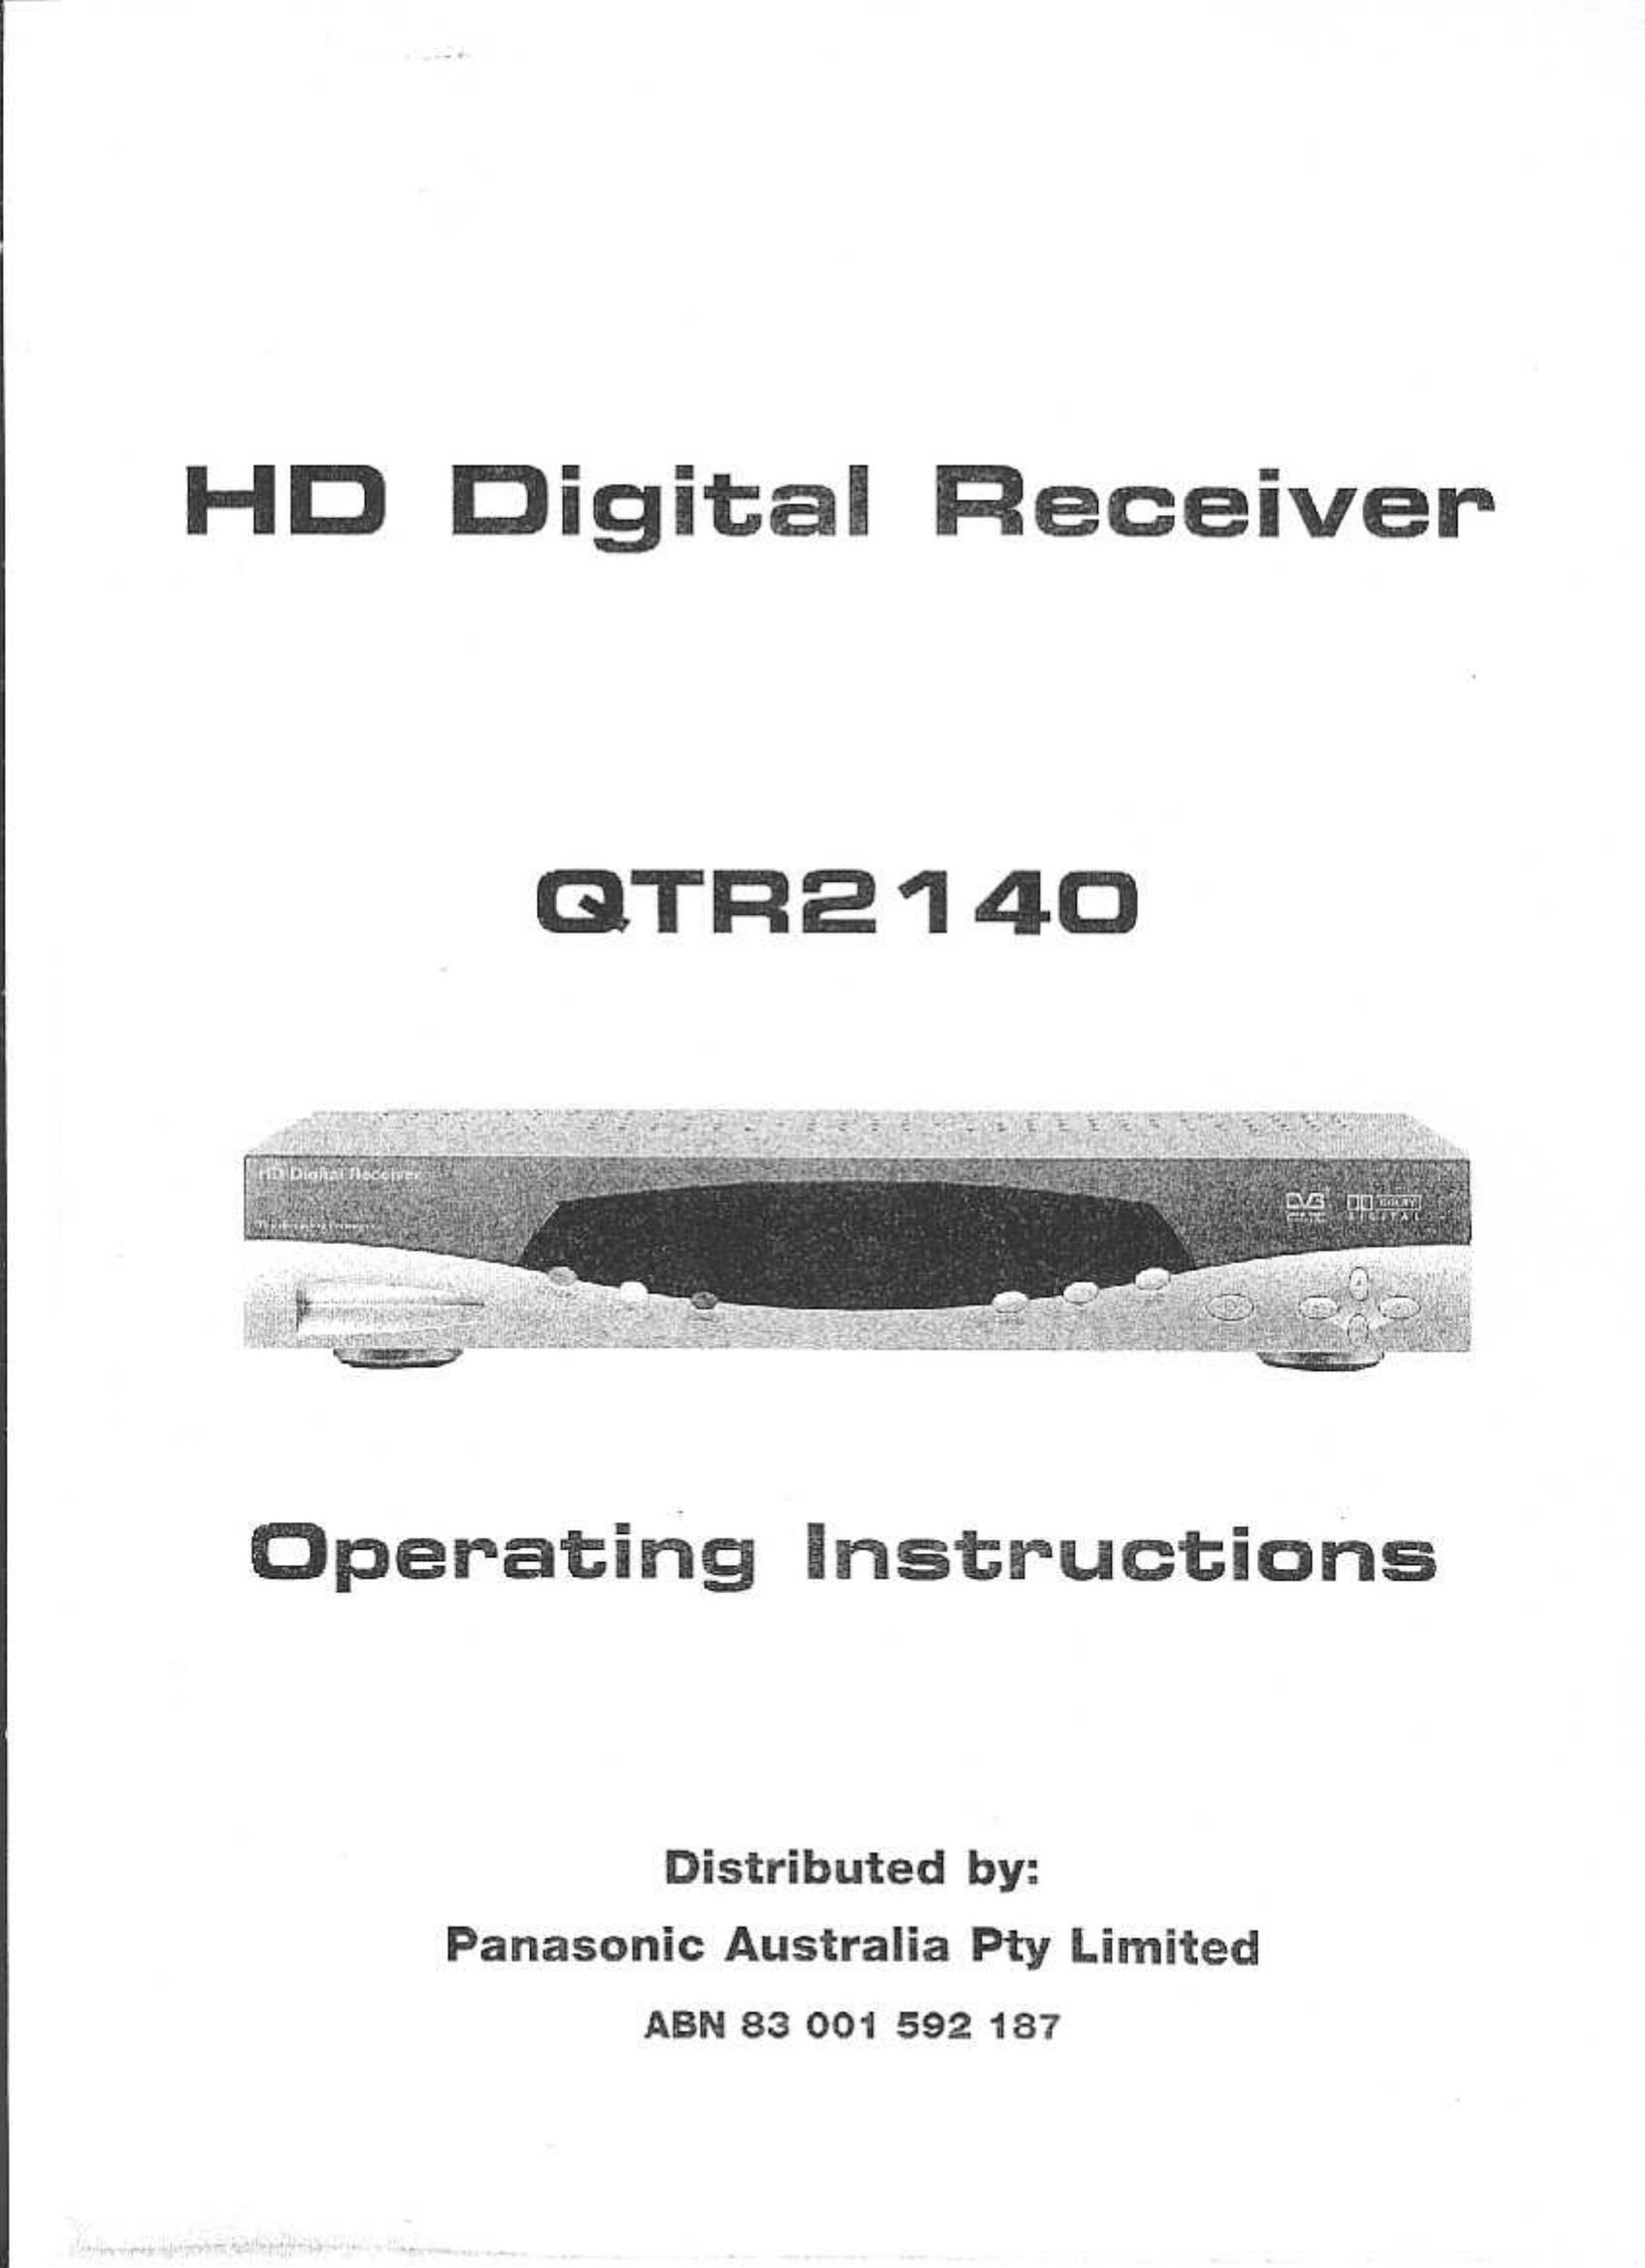 Panasonic QTR 2140 TV Receiver User Manual